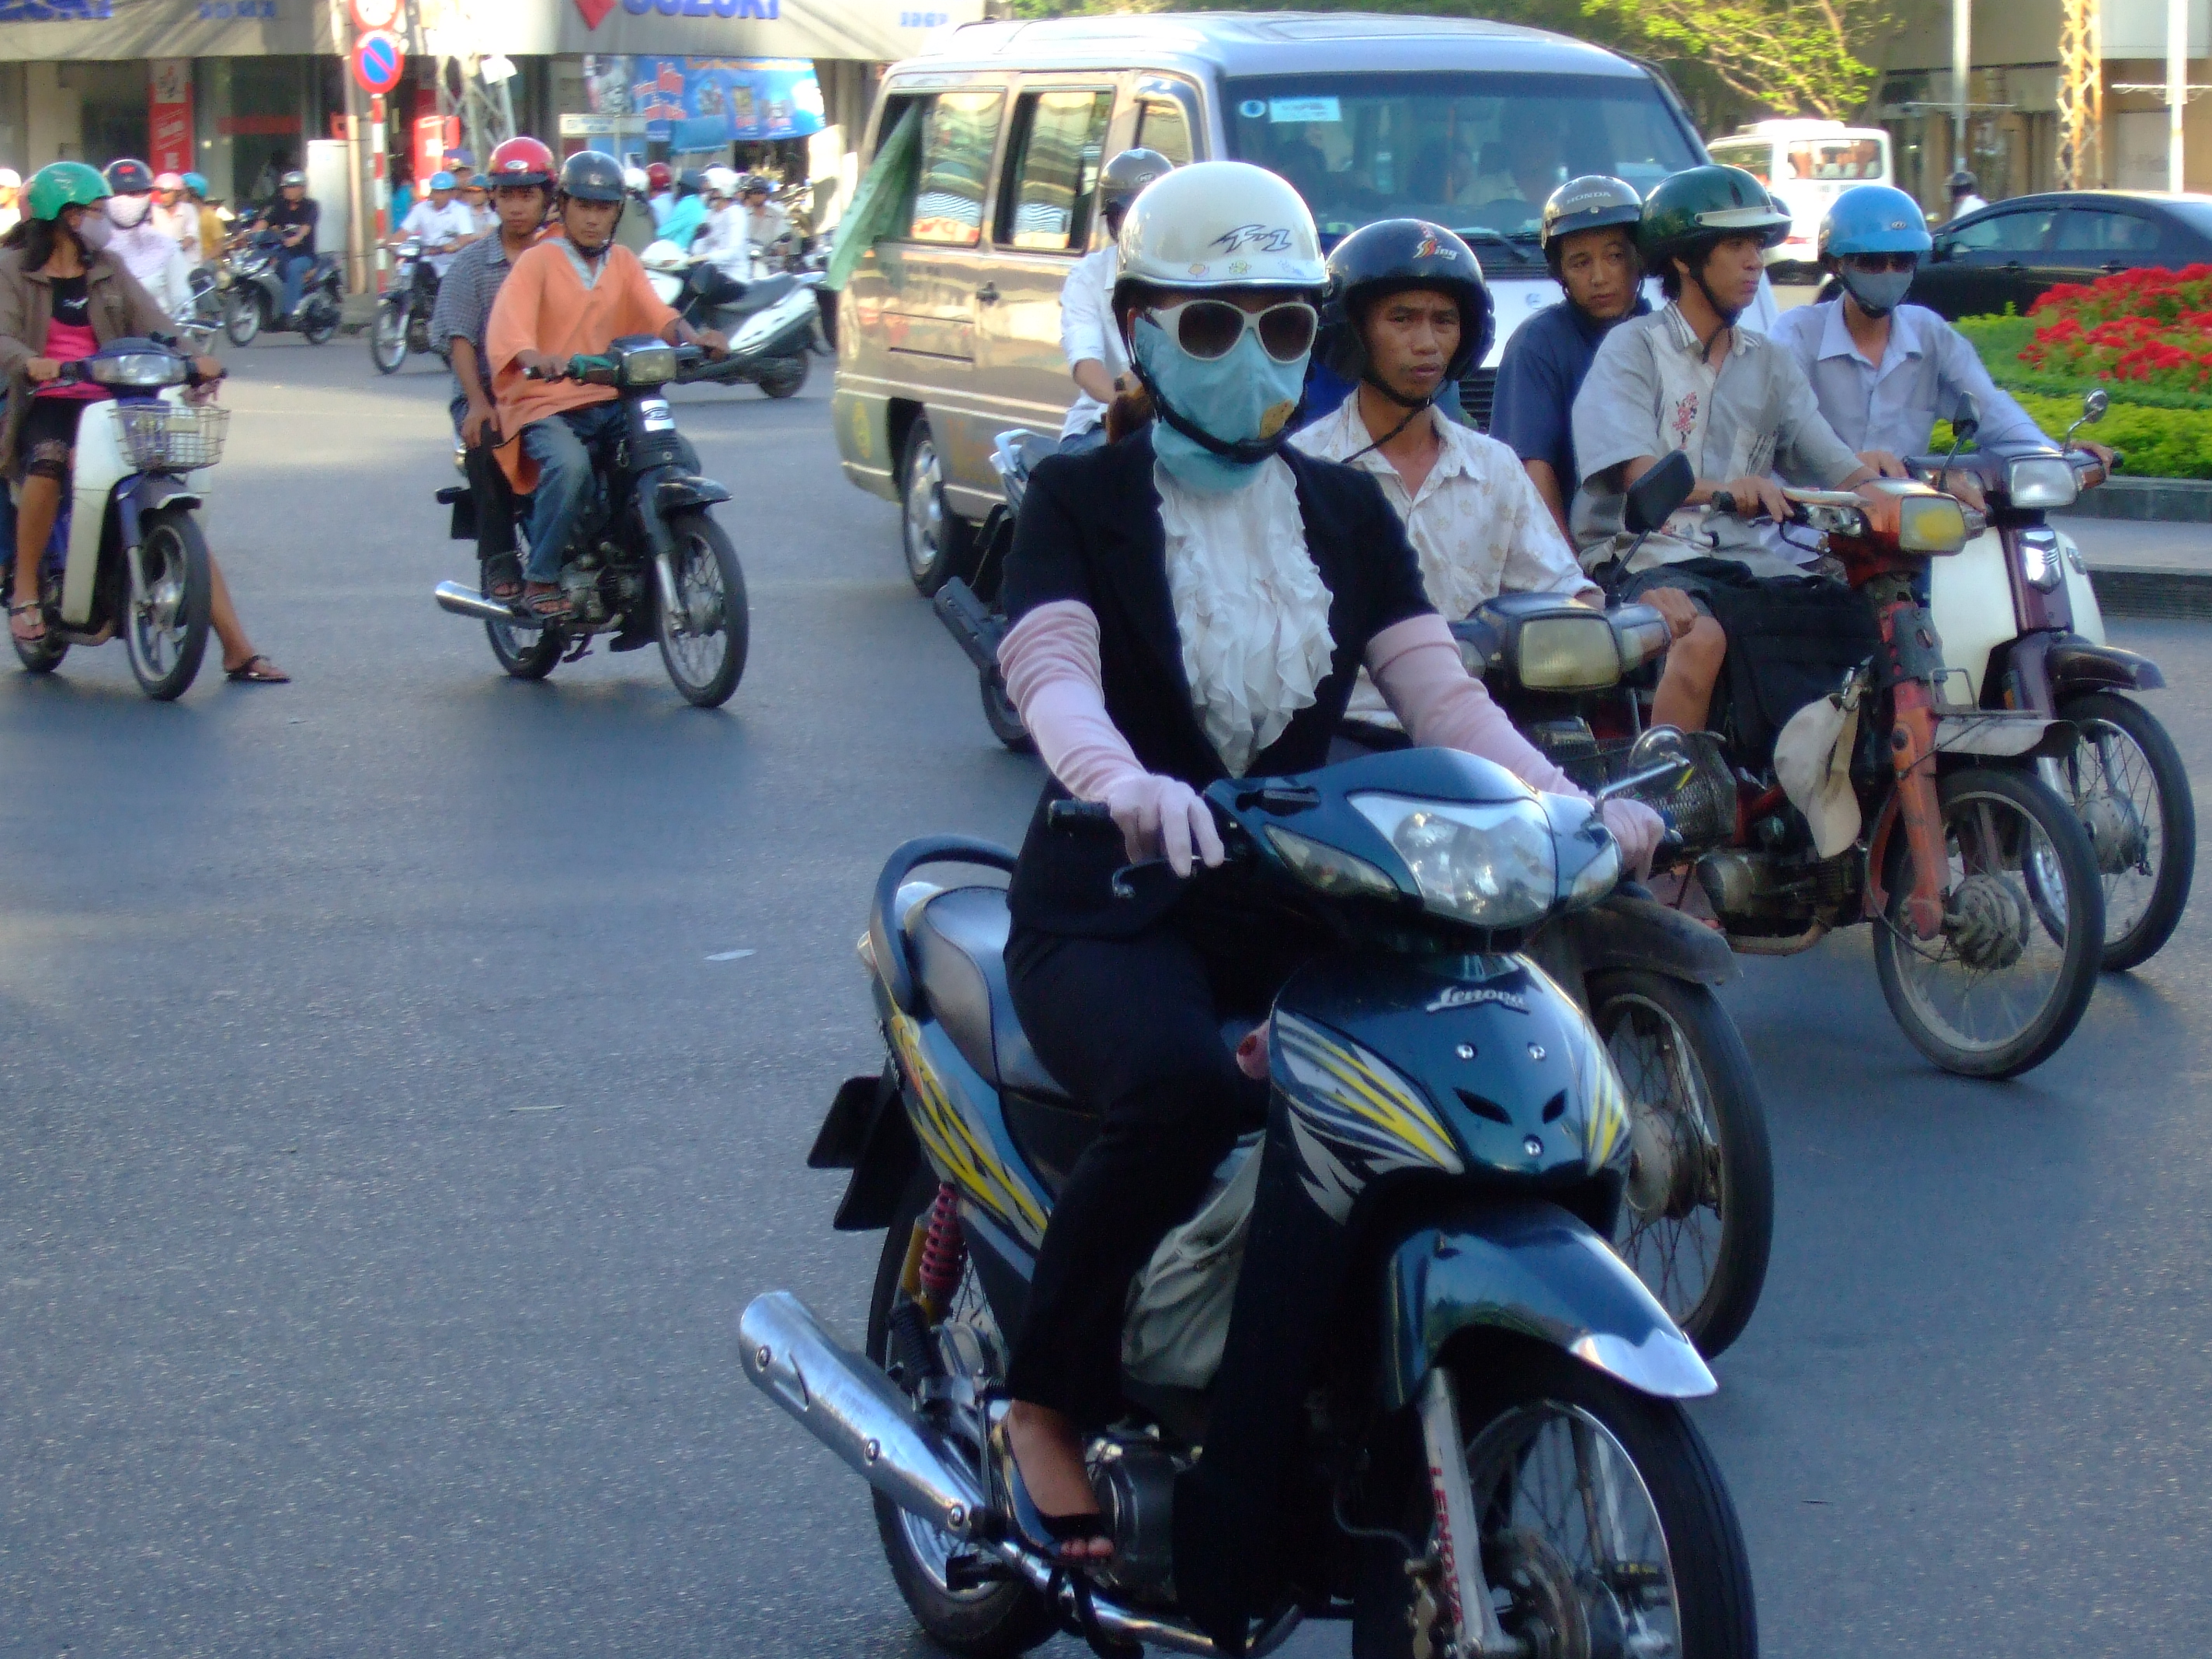 Vietnam Ho Chi Minh City motorbike street scenes Feb 2009 120